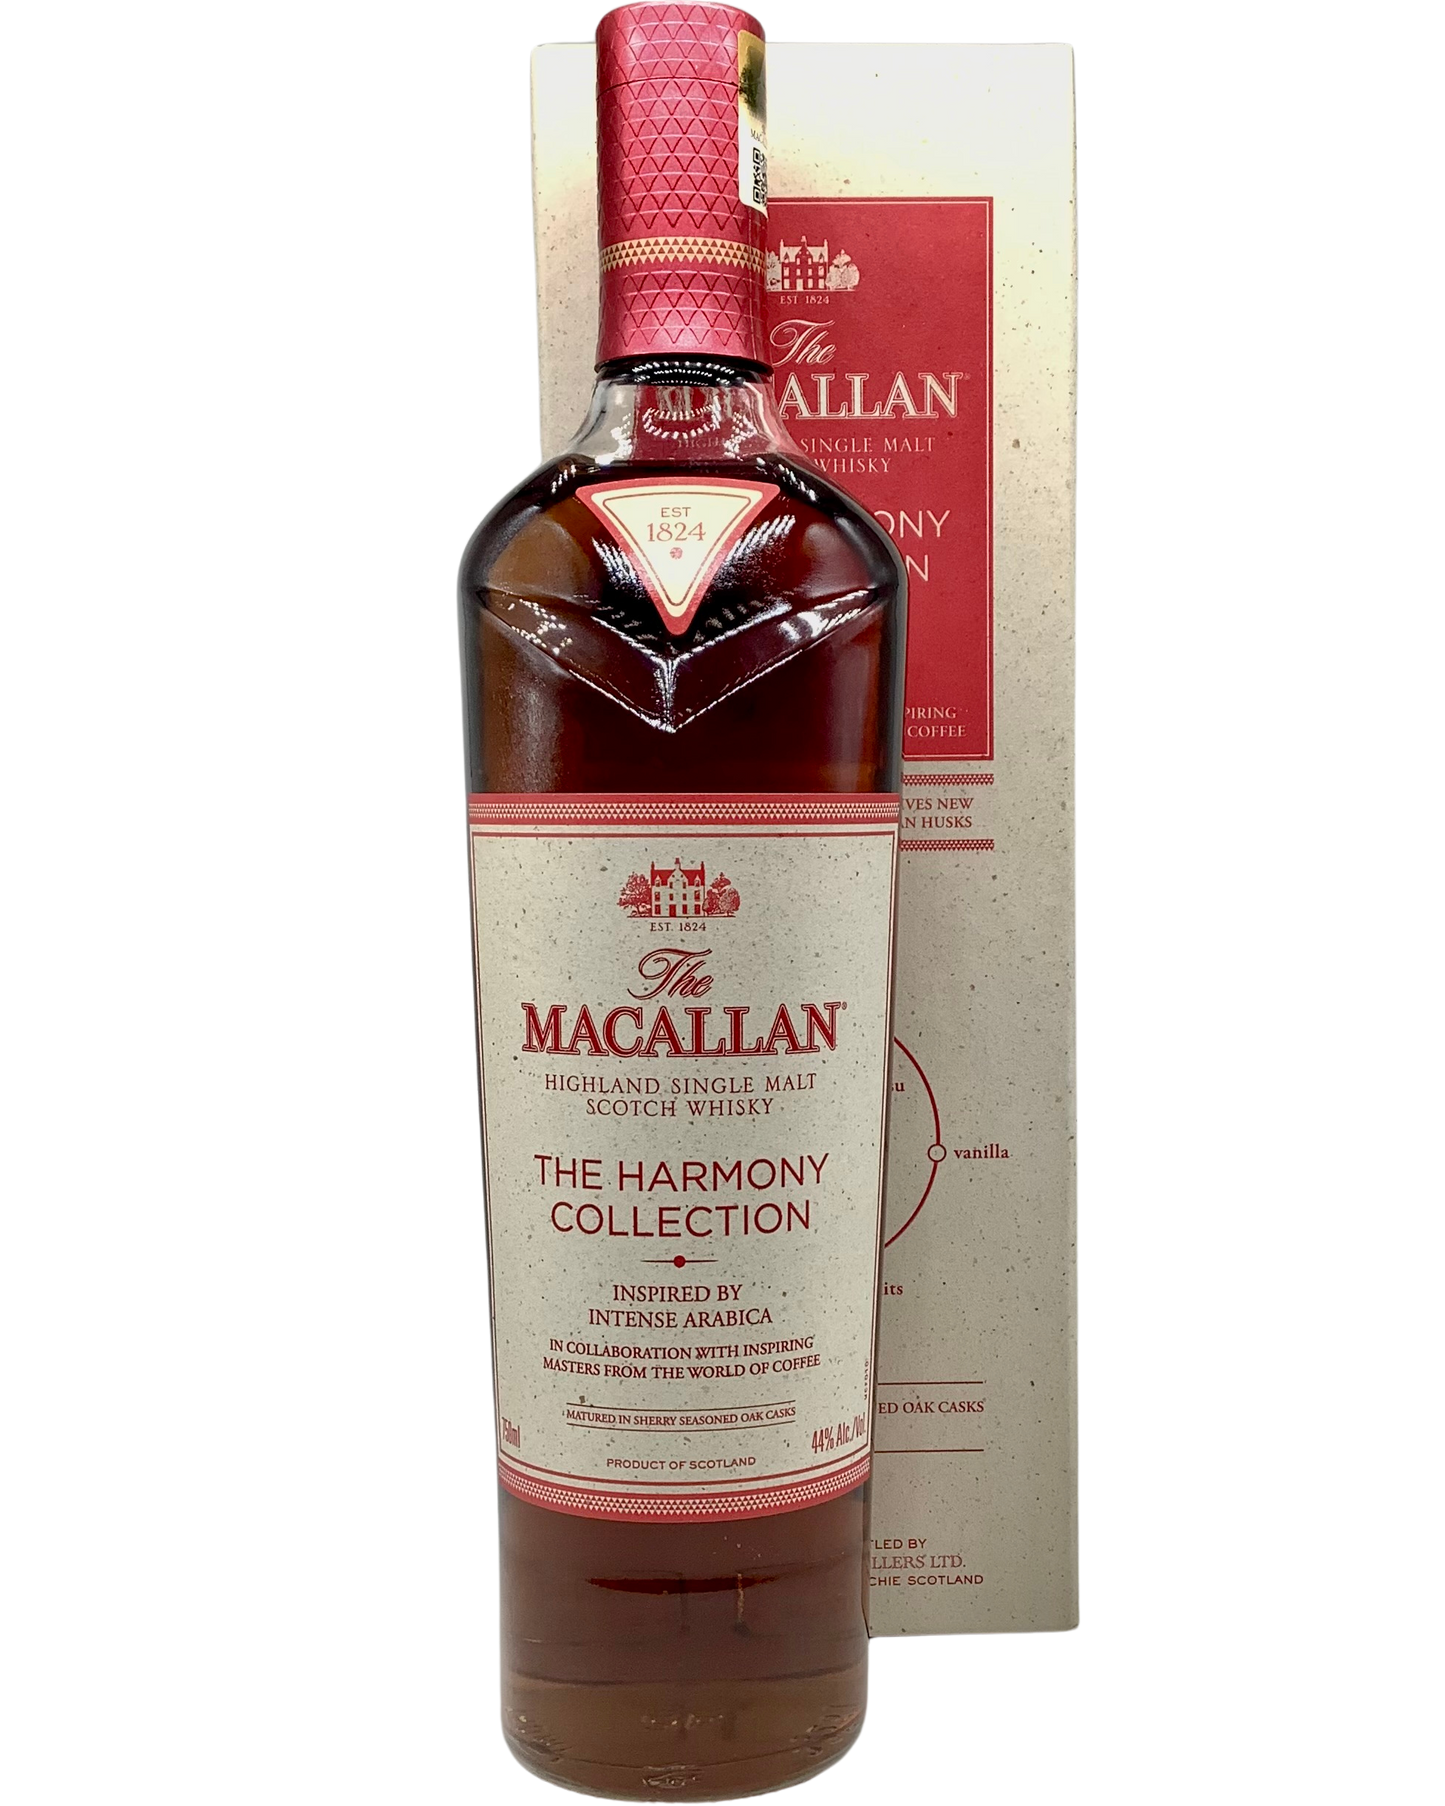 The Macallan Harmony Collection "Intense Arabica" Single Malt Scotch Whisky newarrival